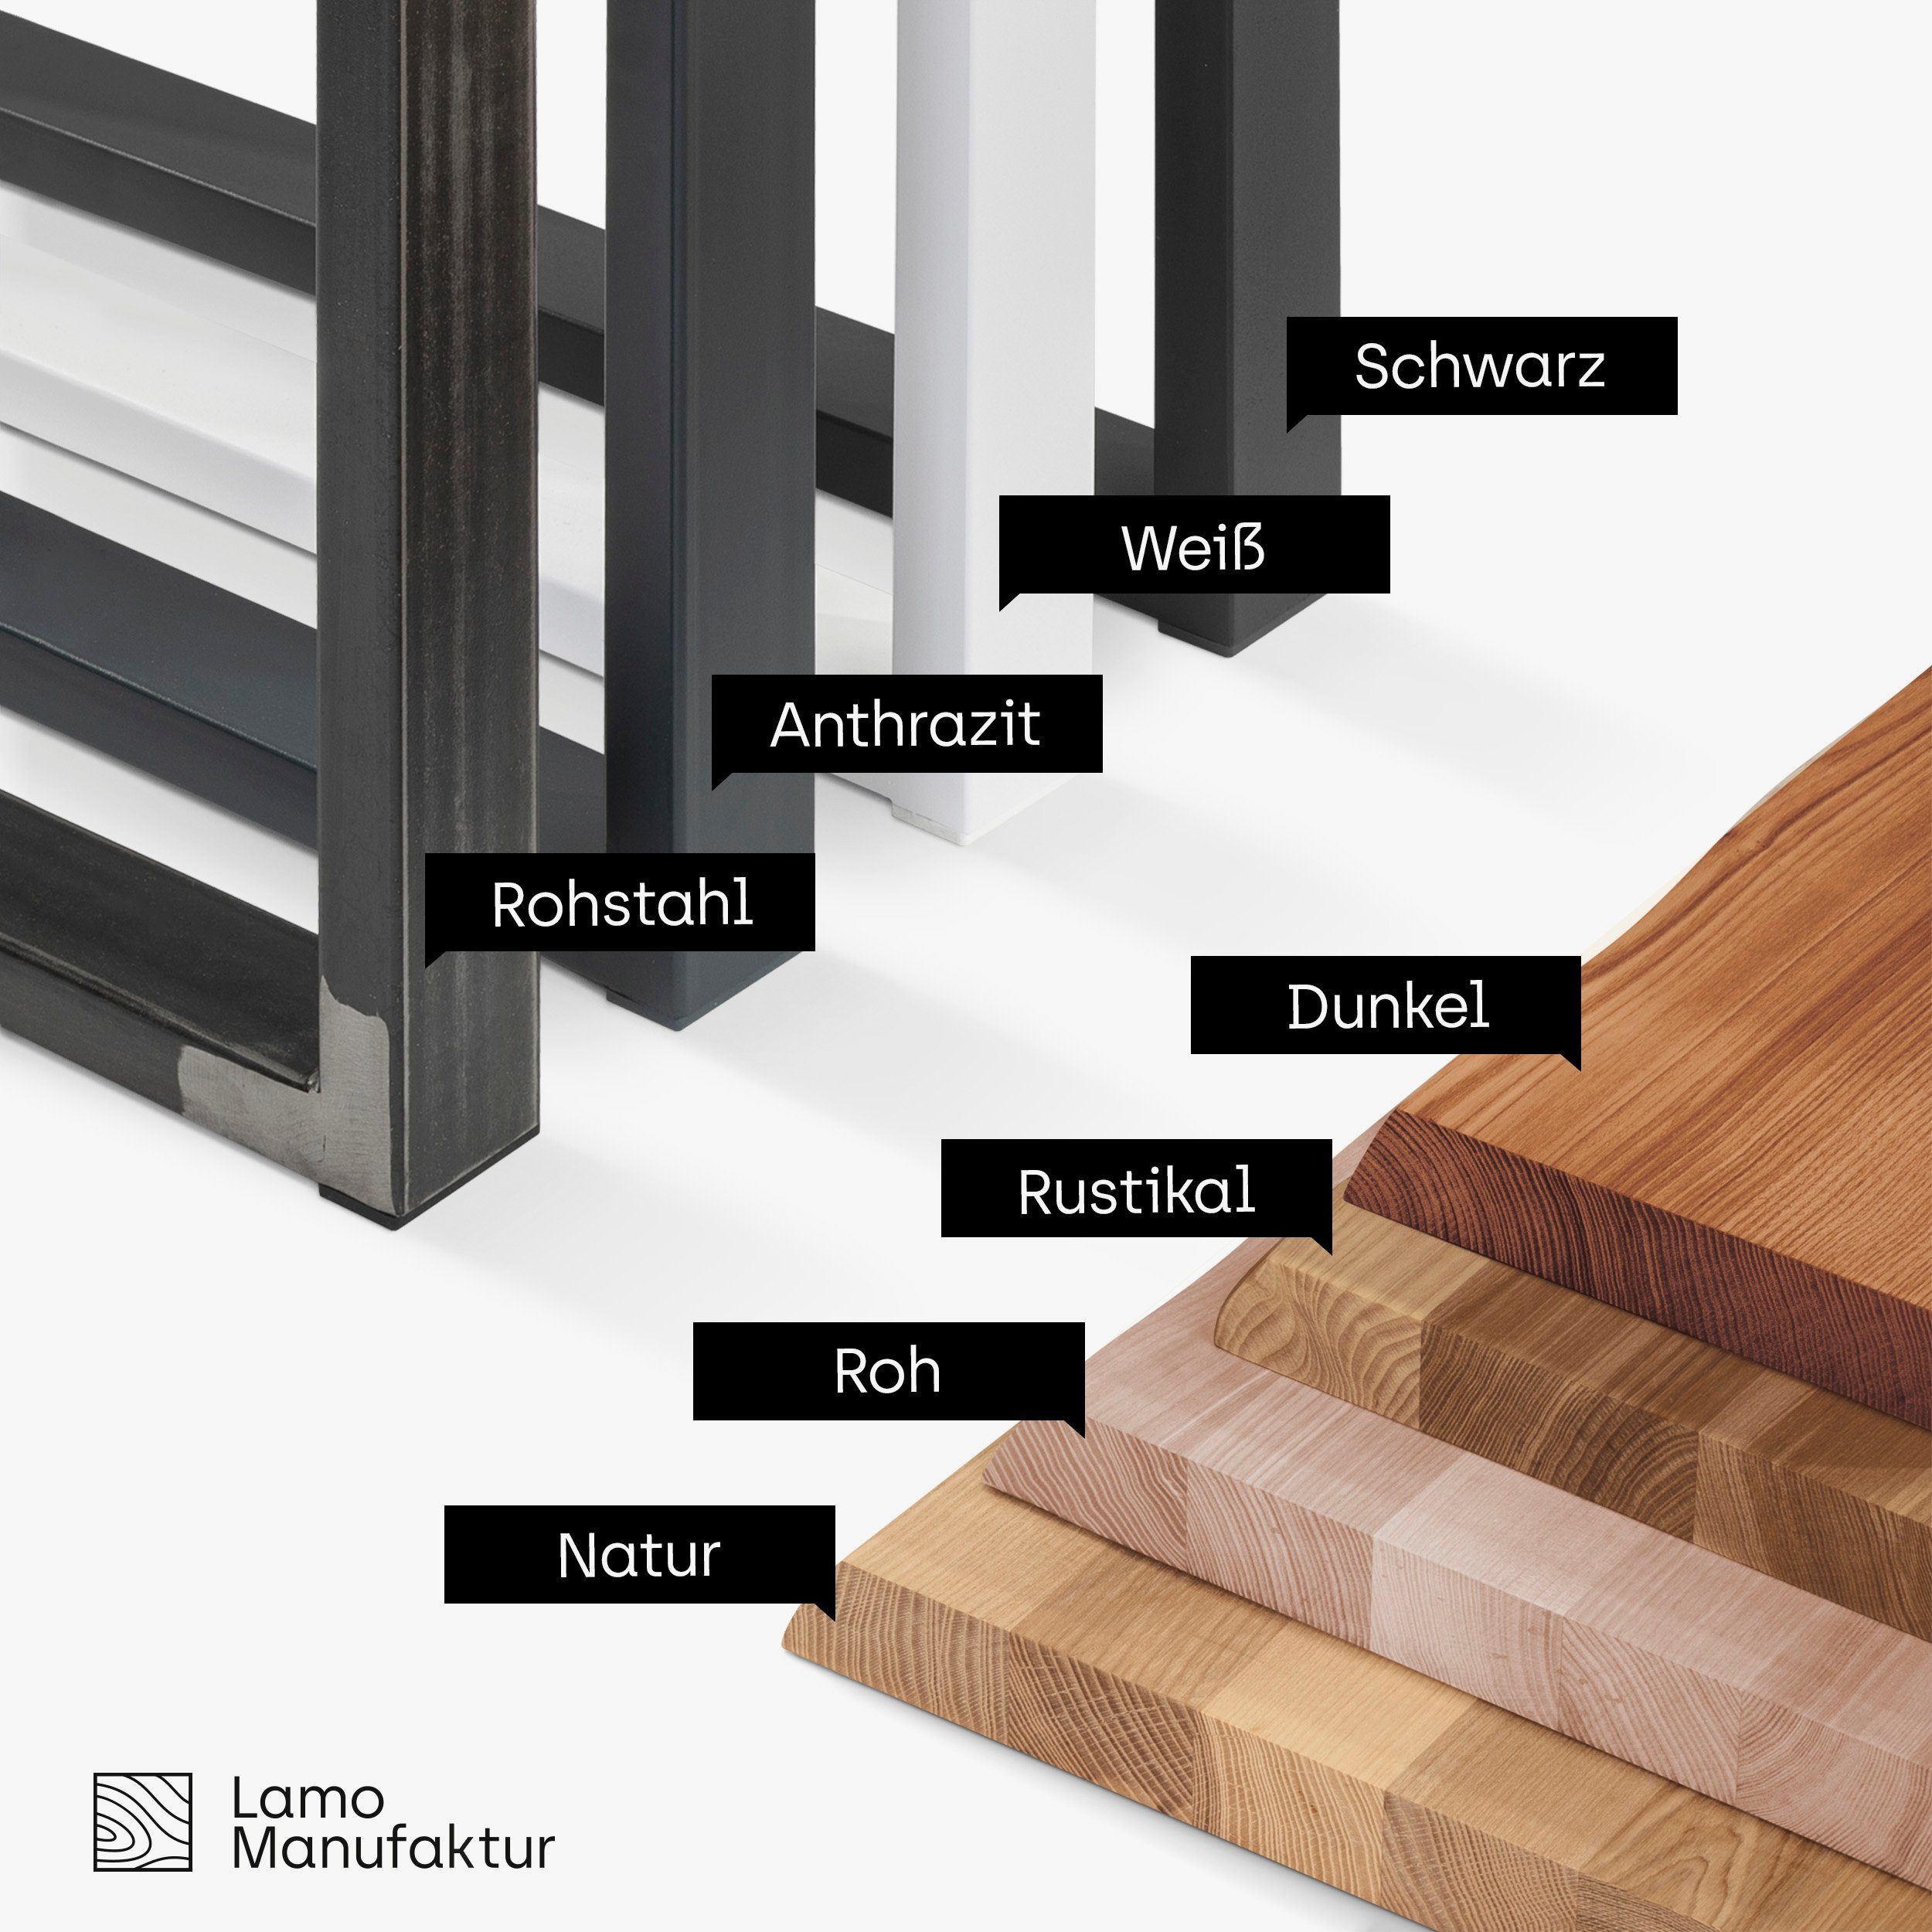 LAMO Baumkante Schwarz Massivholz Baumkantentisch Manufaktur | Rustikal Loft (1 inkl. Tisch), Metallgestell Esstisch massiv